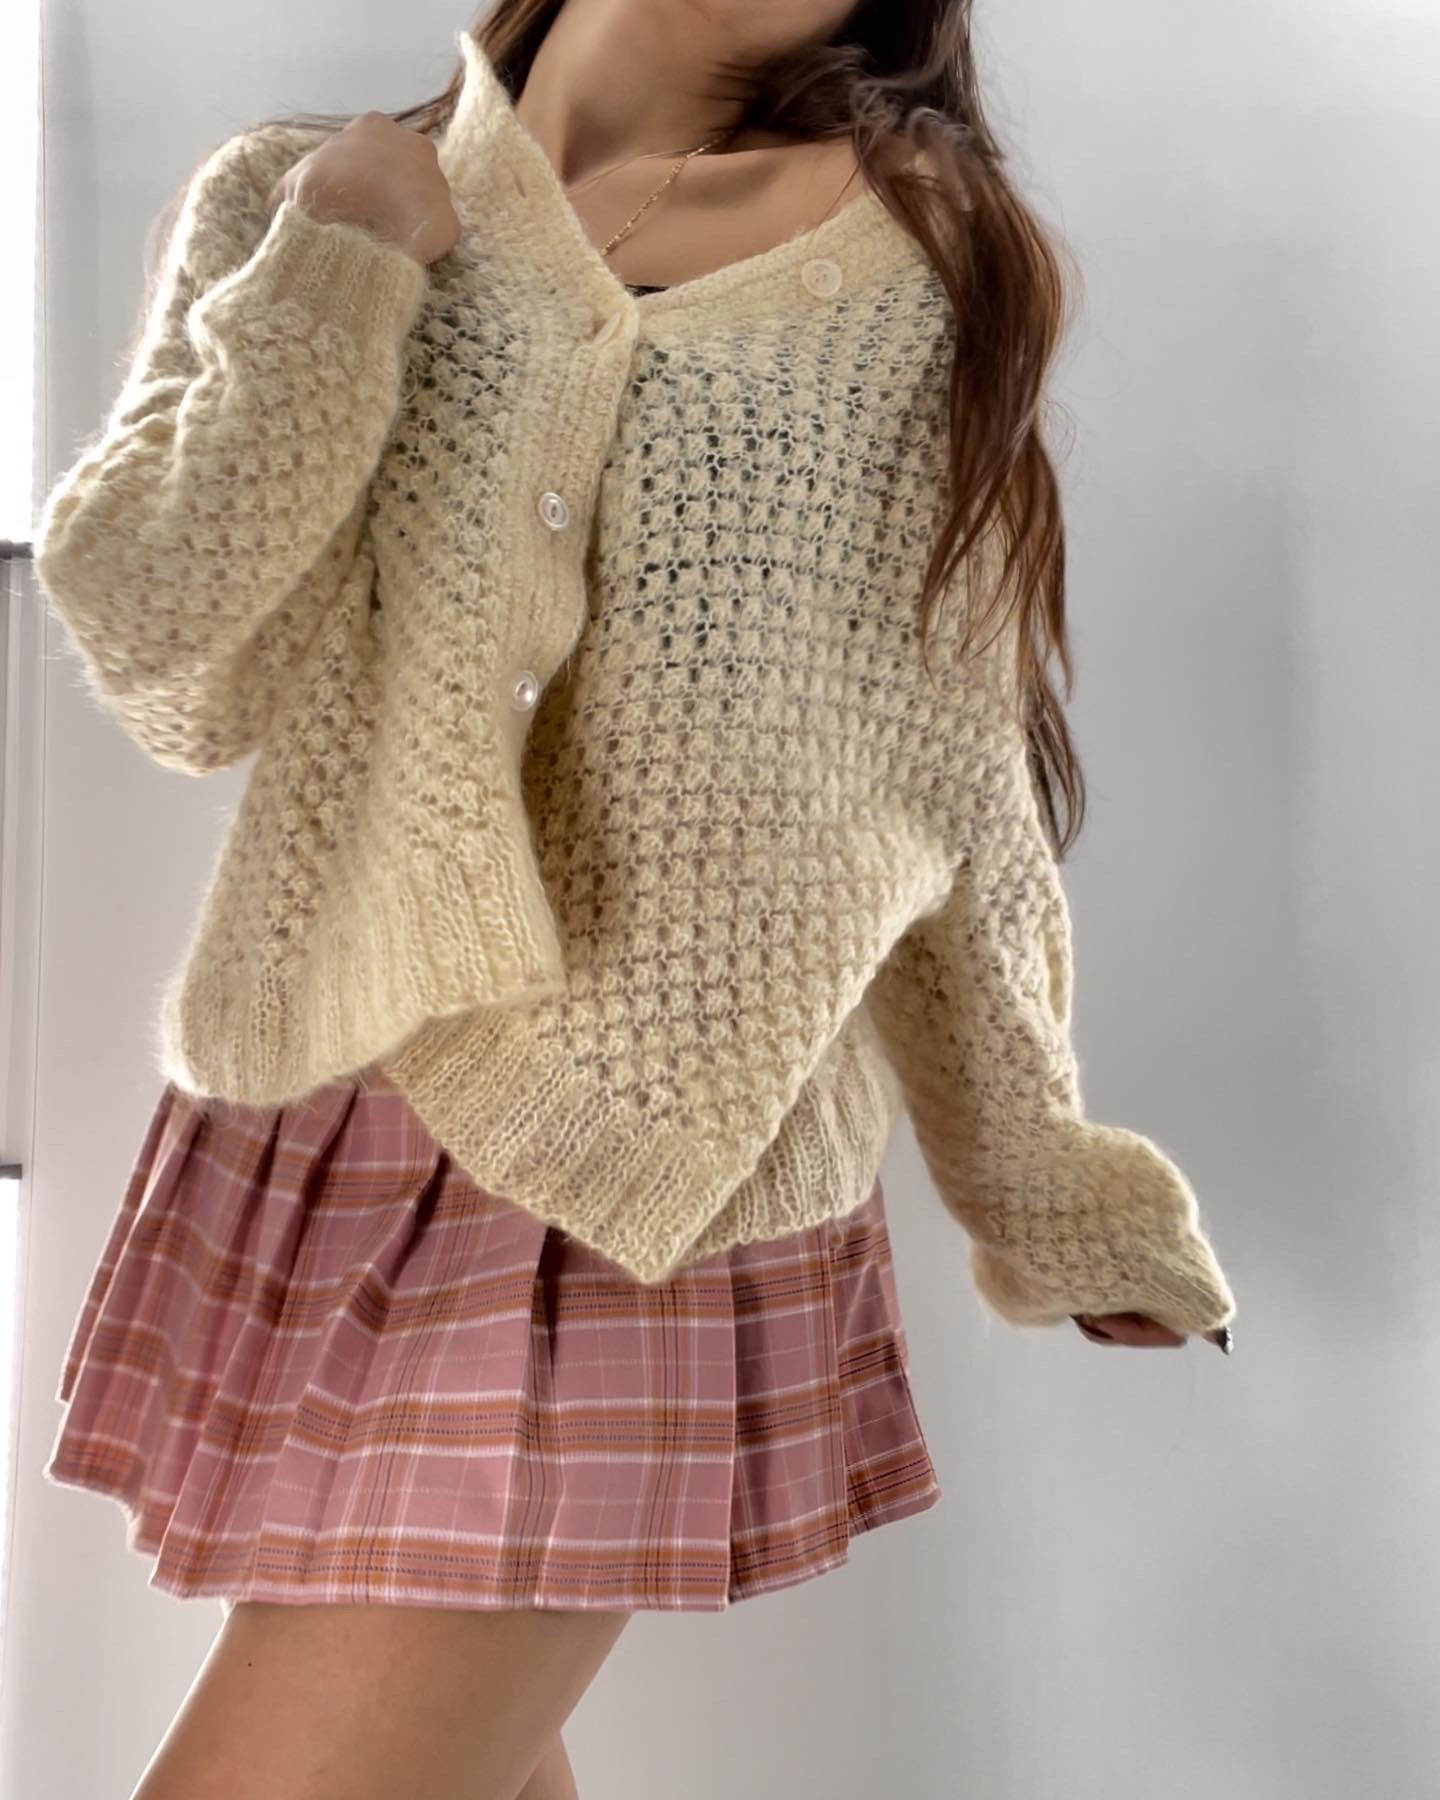 Lil Handmade Cream Granny Sweater (Medium/Large)